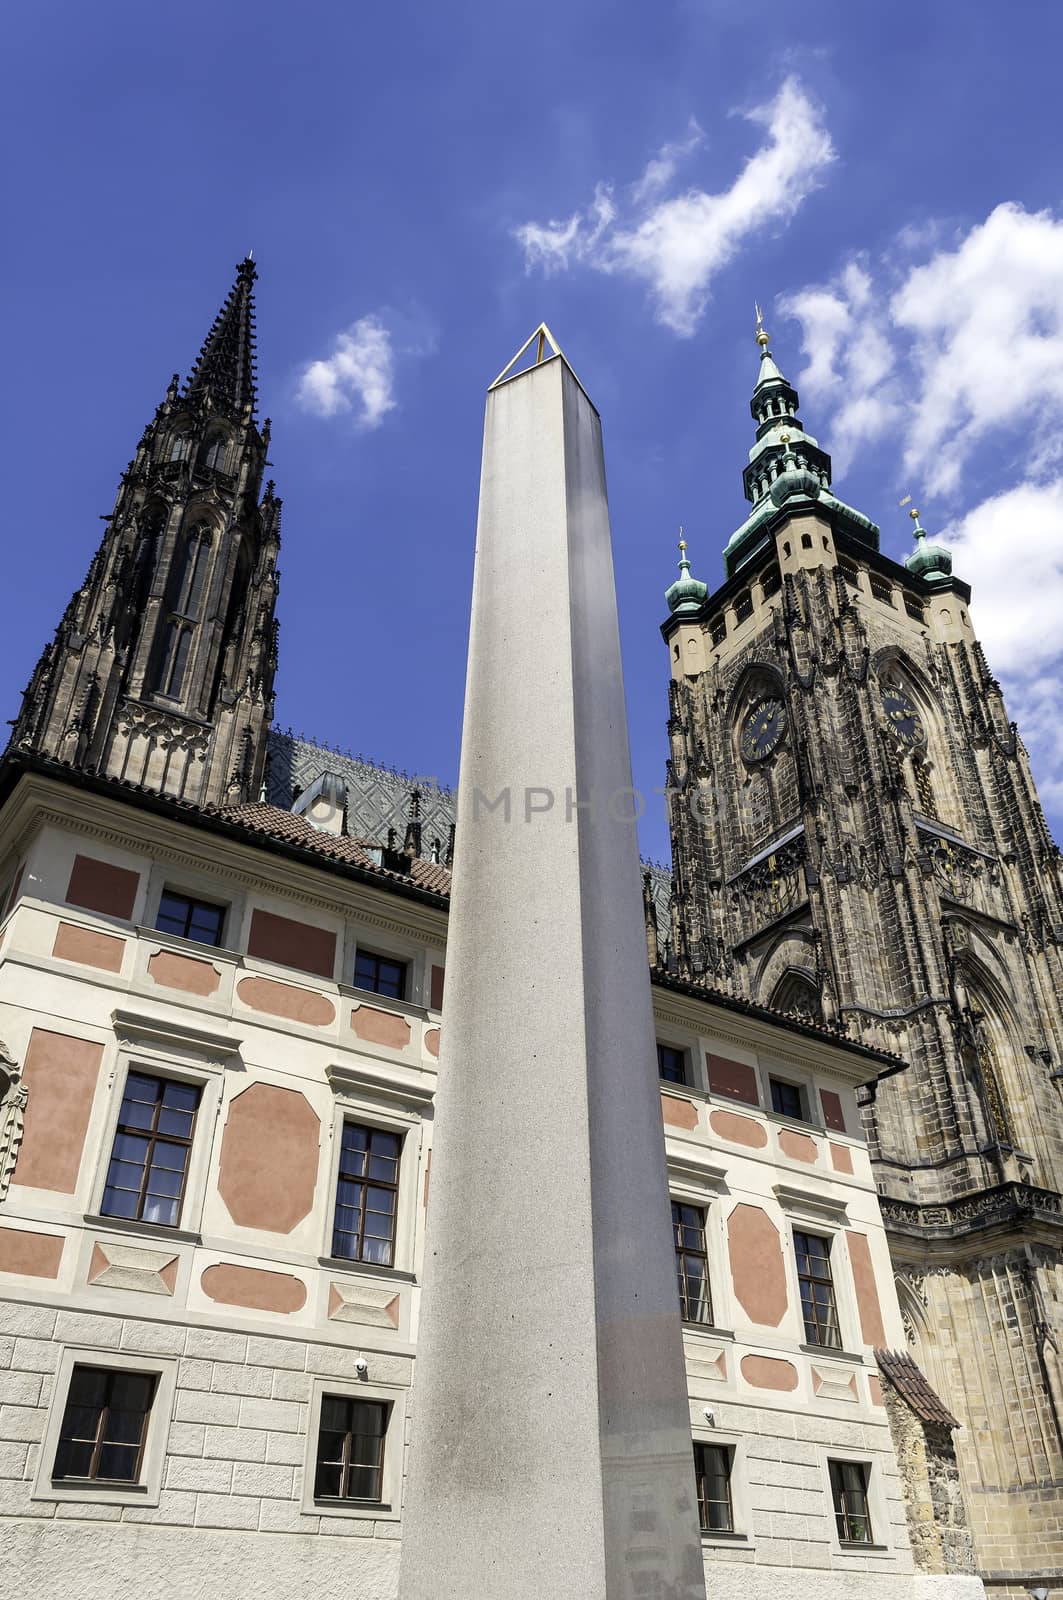 Impressive Saint Vitus Cathedral and obelisk in Prague, Czech Republic.